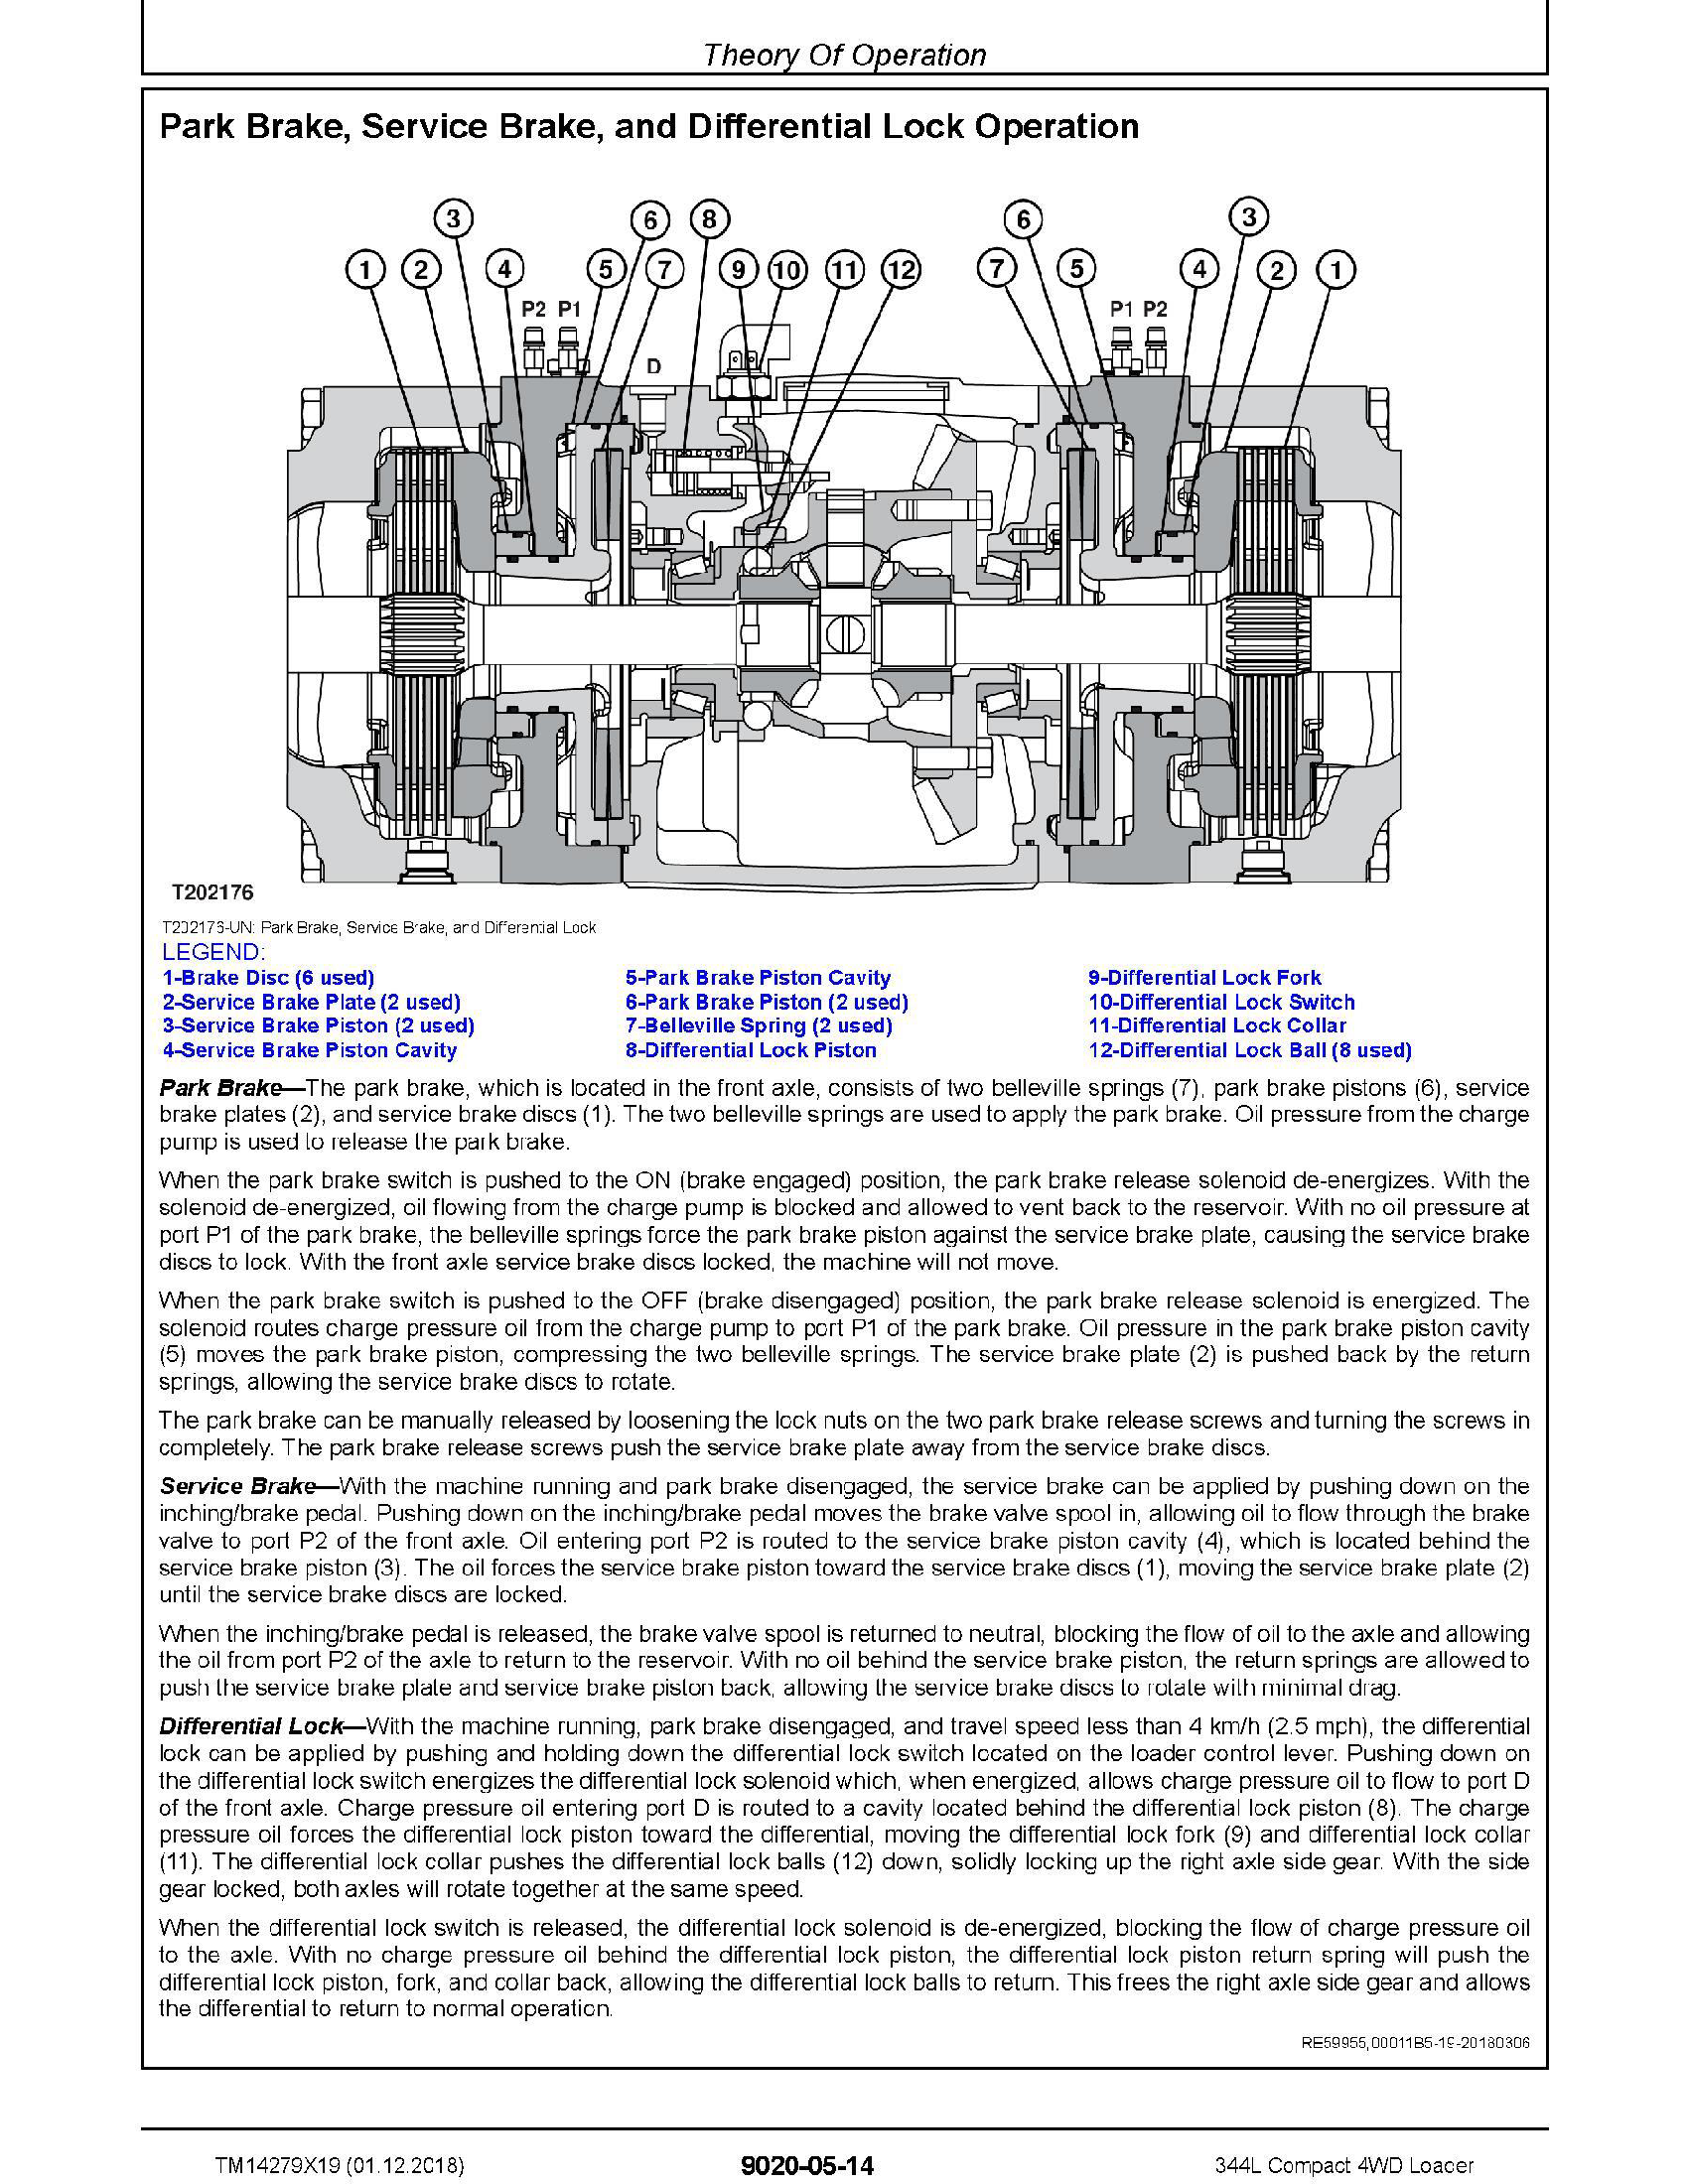 John Deere 1LU344LH manual pdf